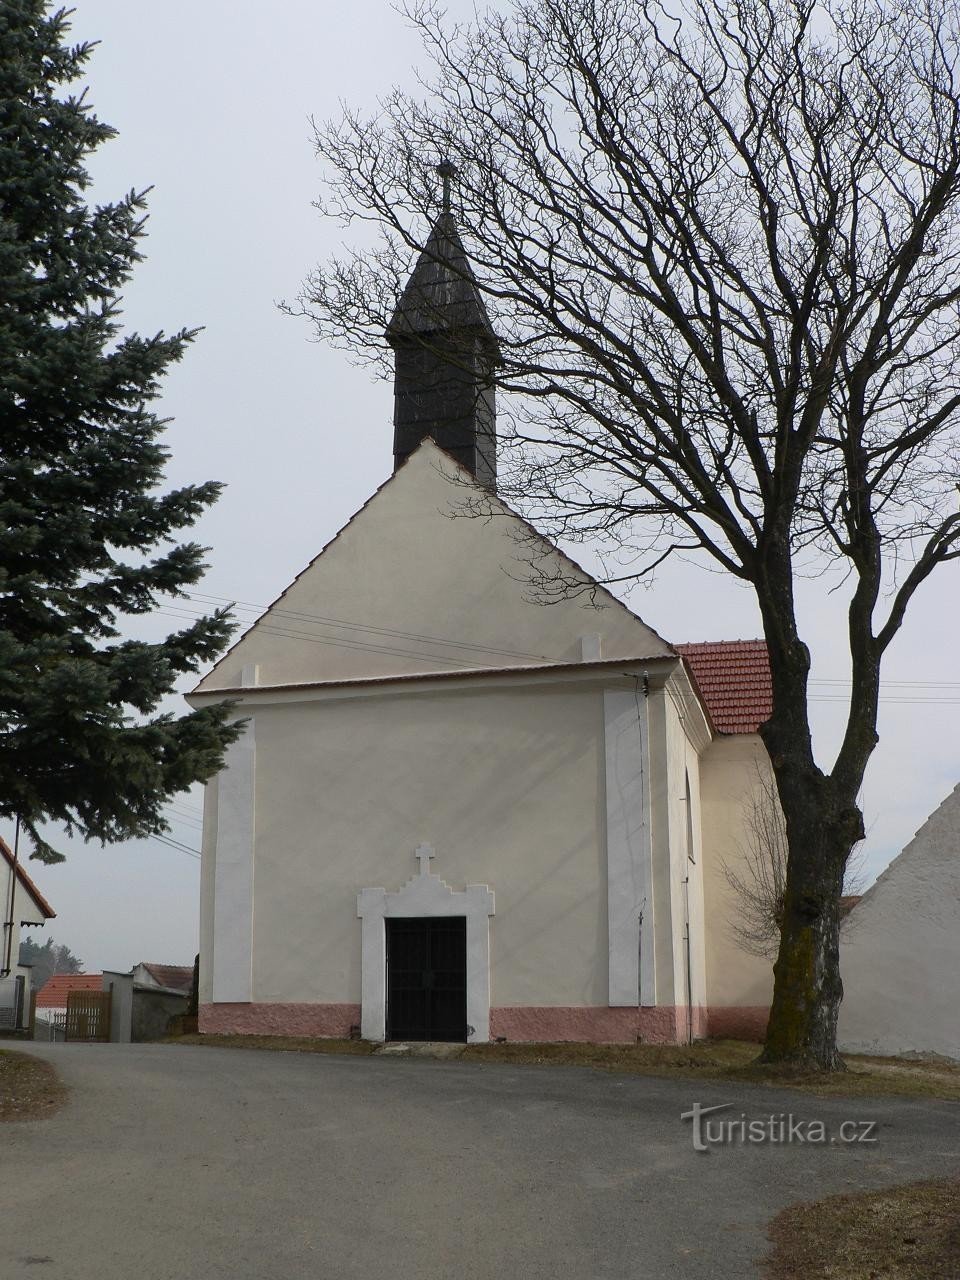 Kladruby, pilgrimage chapel of the Holy Trinity